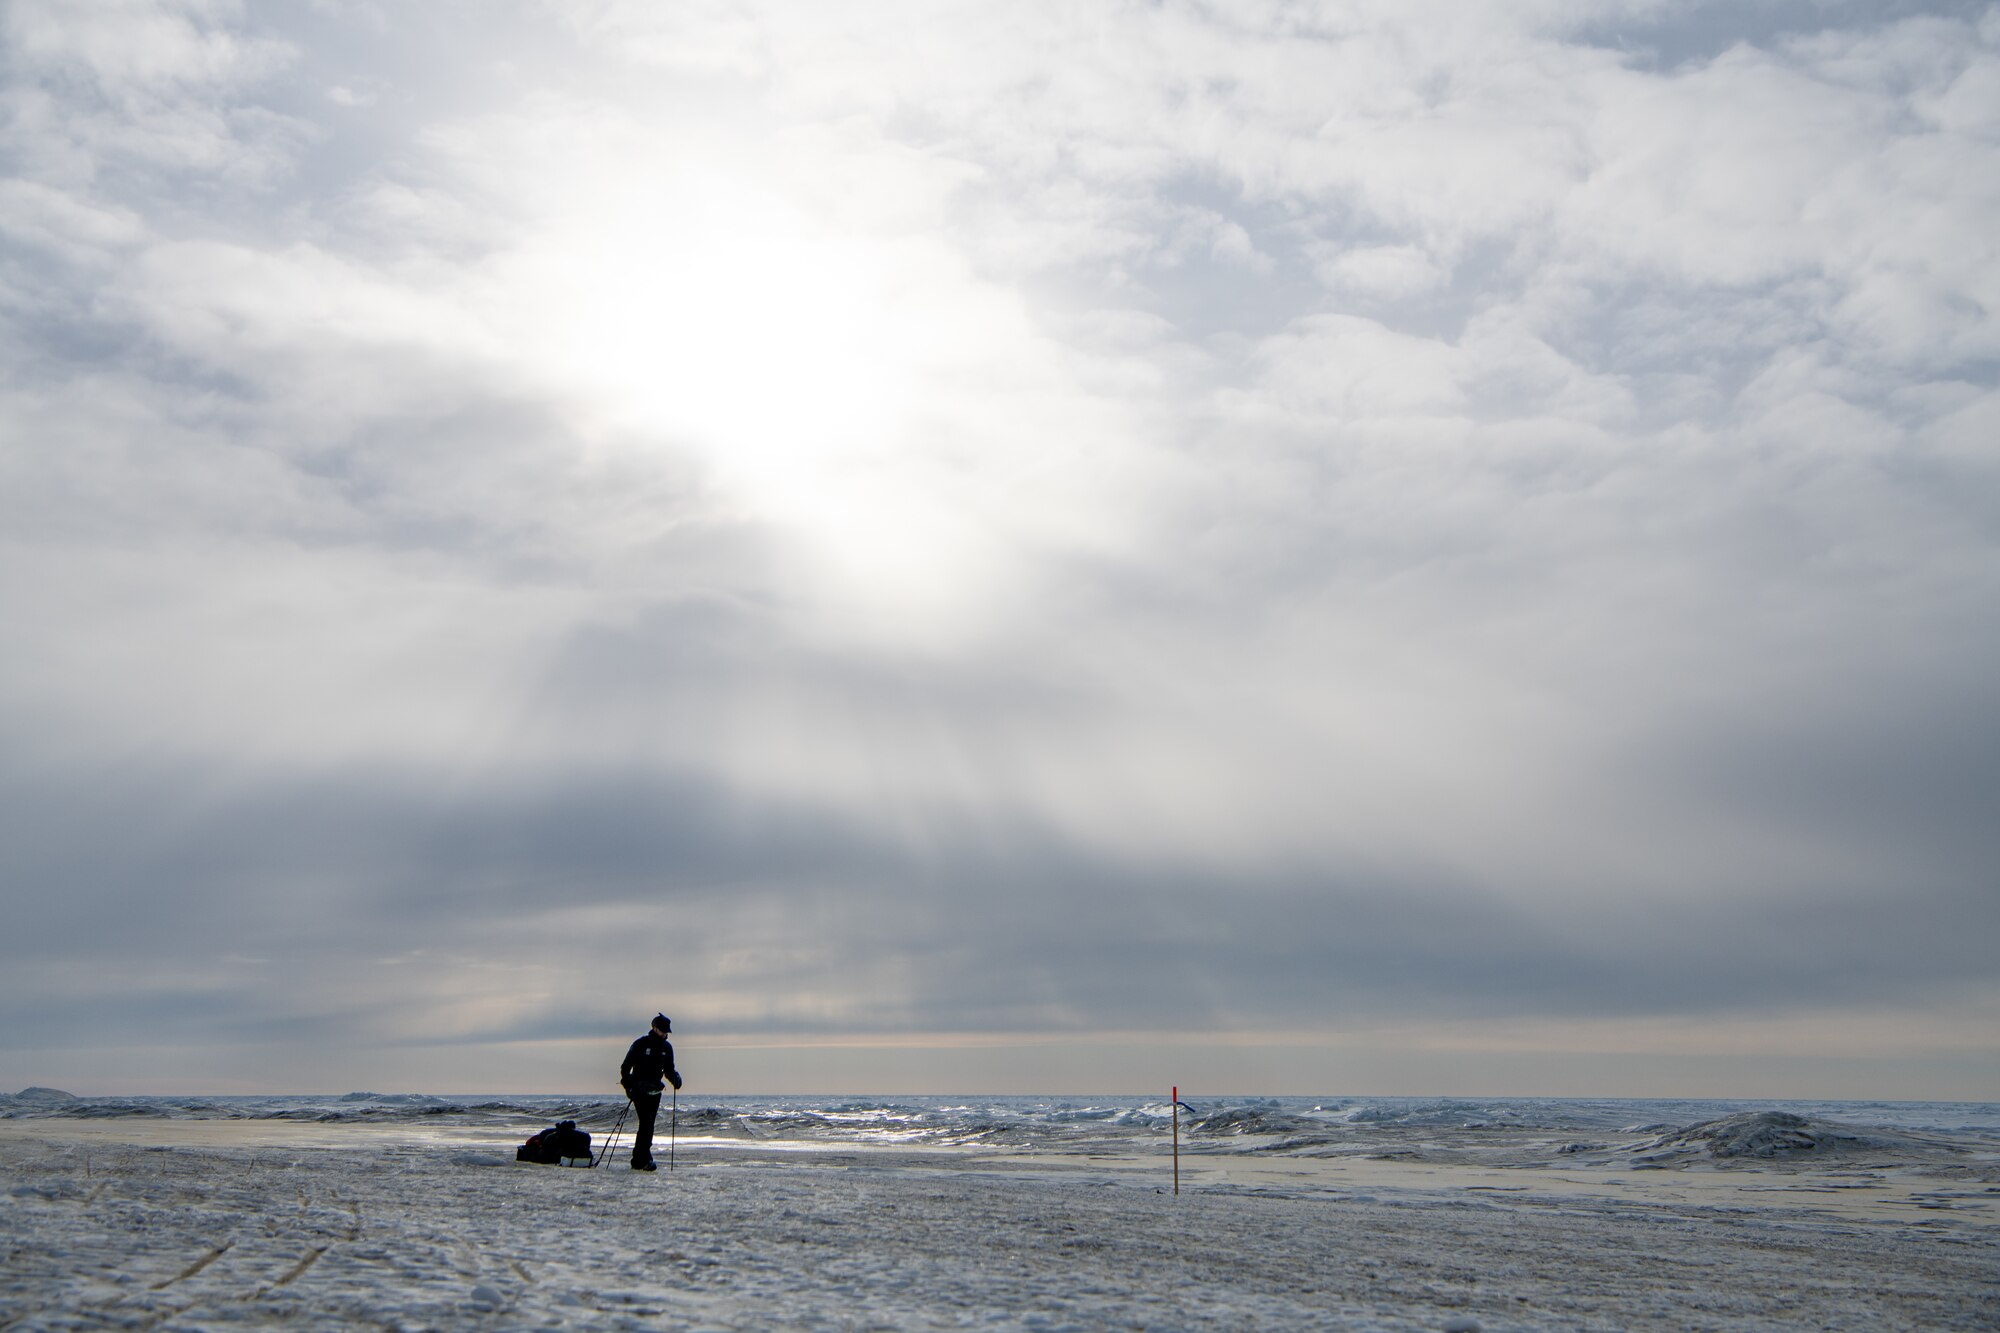 Maj. Joshua Brown hikes across icy terrain.